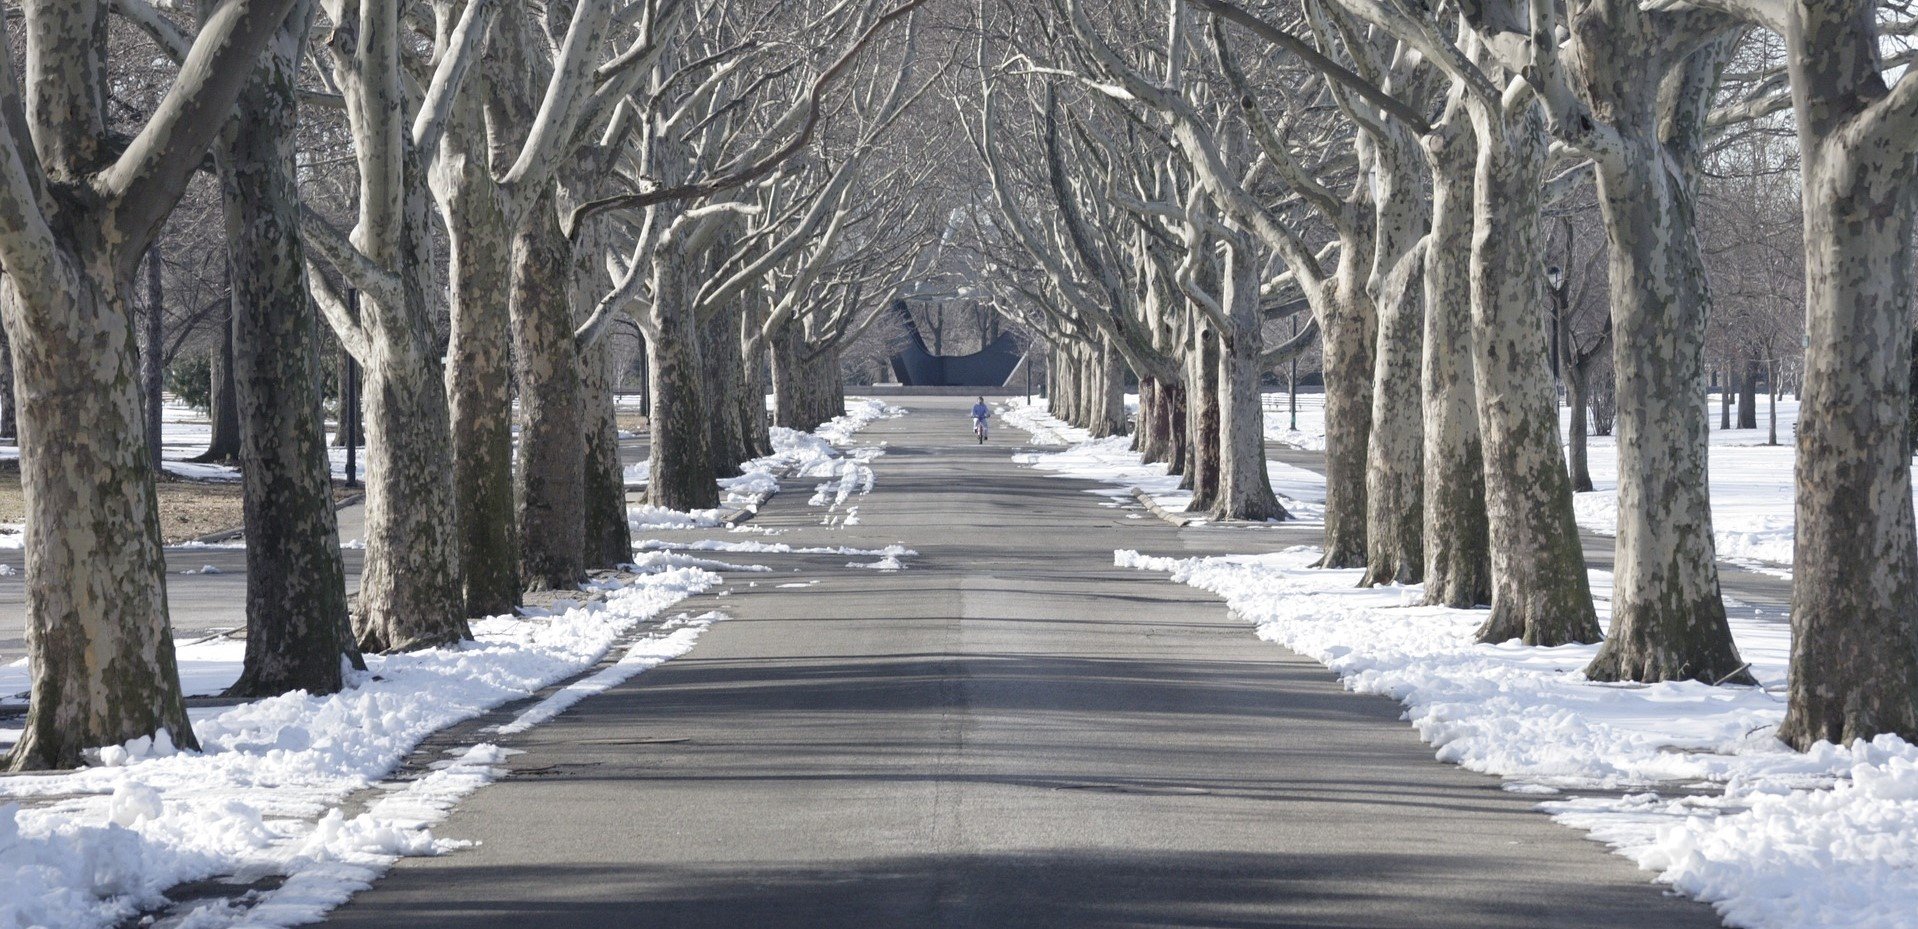 Snowy Street in New York - VeteranCarDonations.org